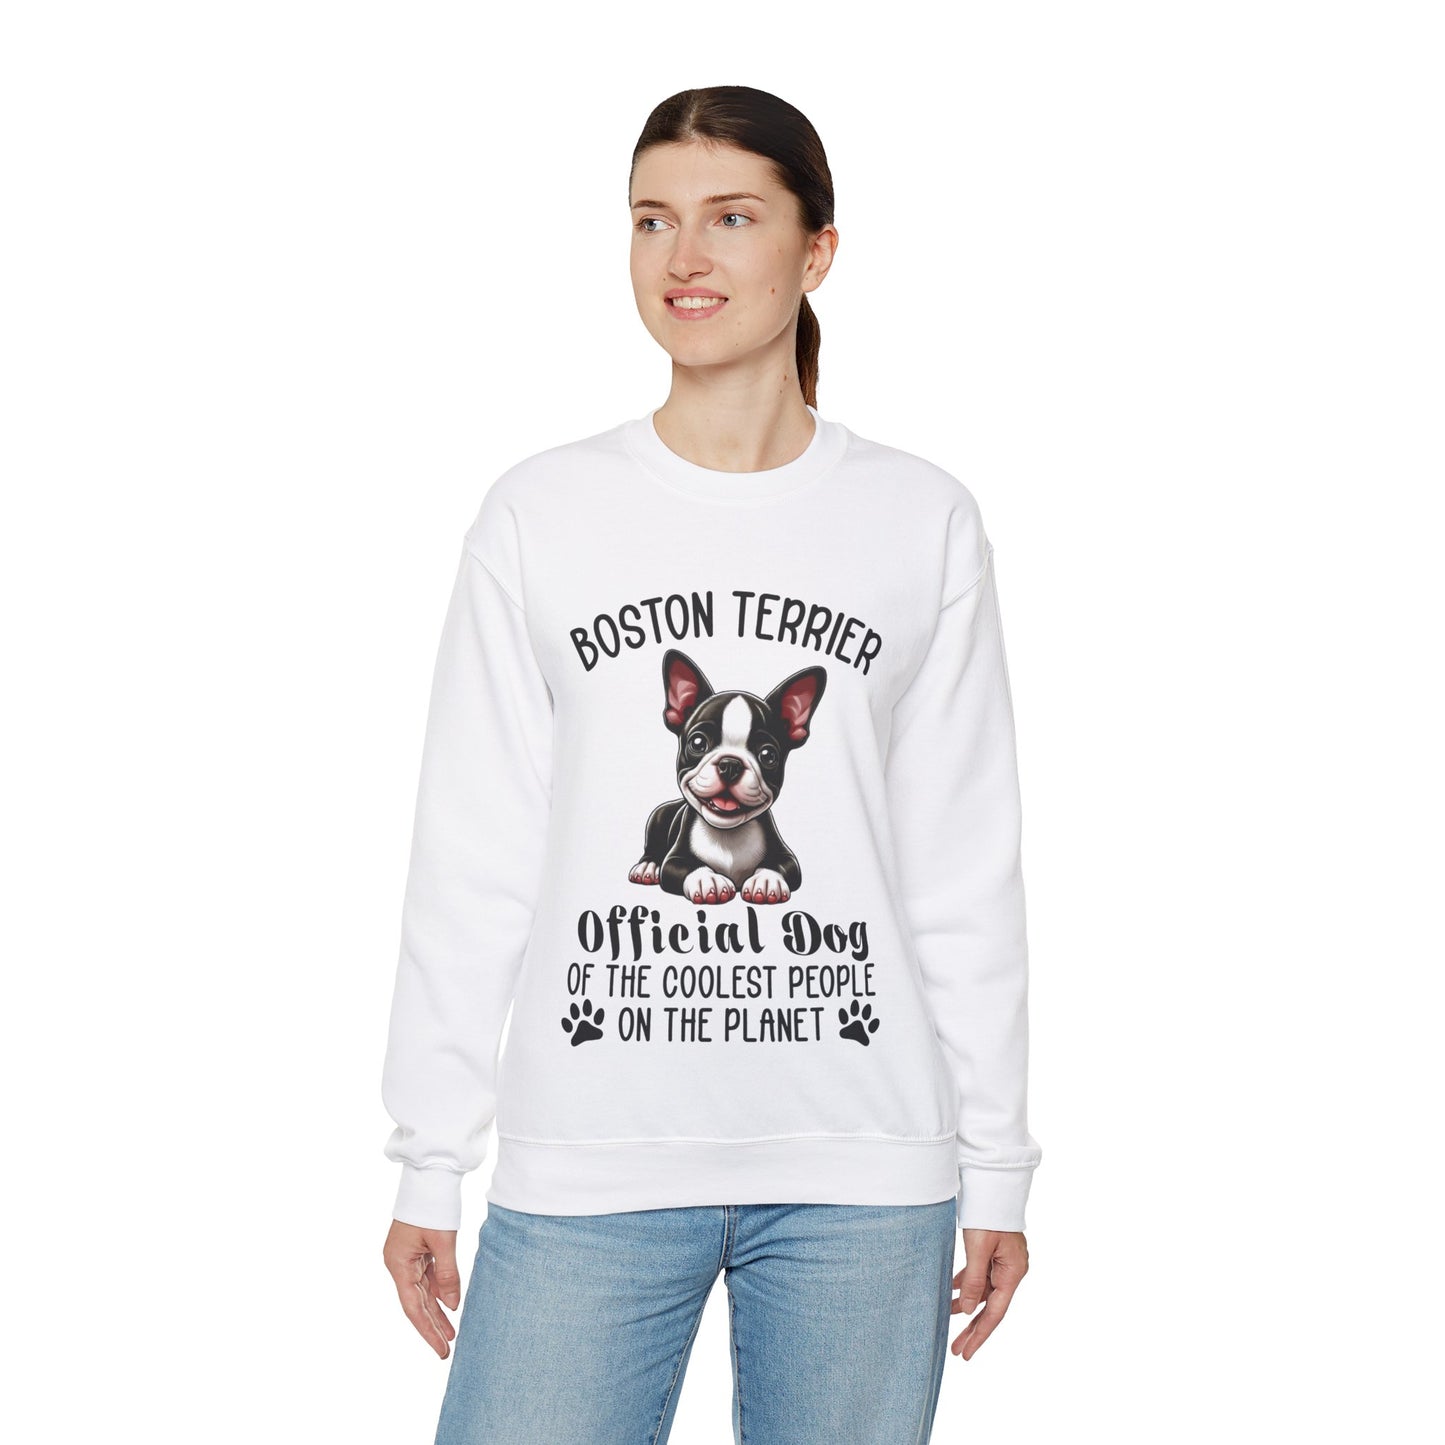 Sinatra  - Unisex Sweatshirt for Boston Terrier lovers